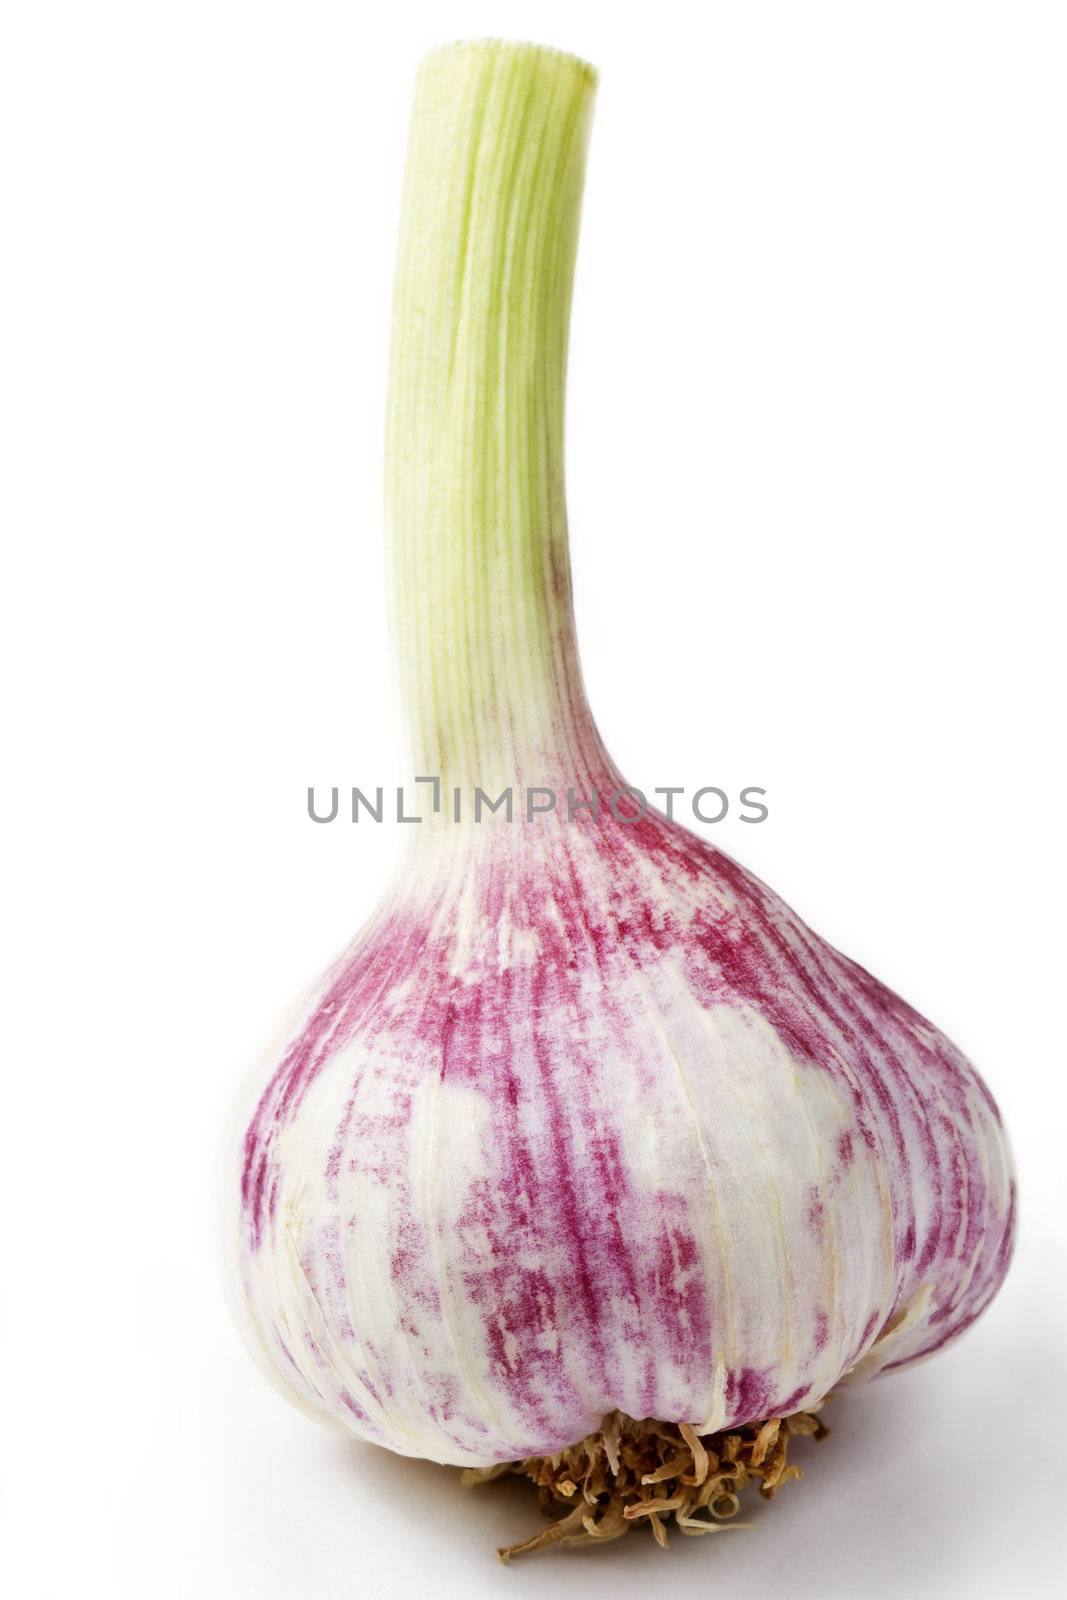 purple garlic by RobStark